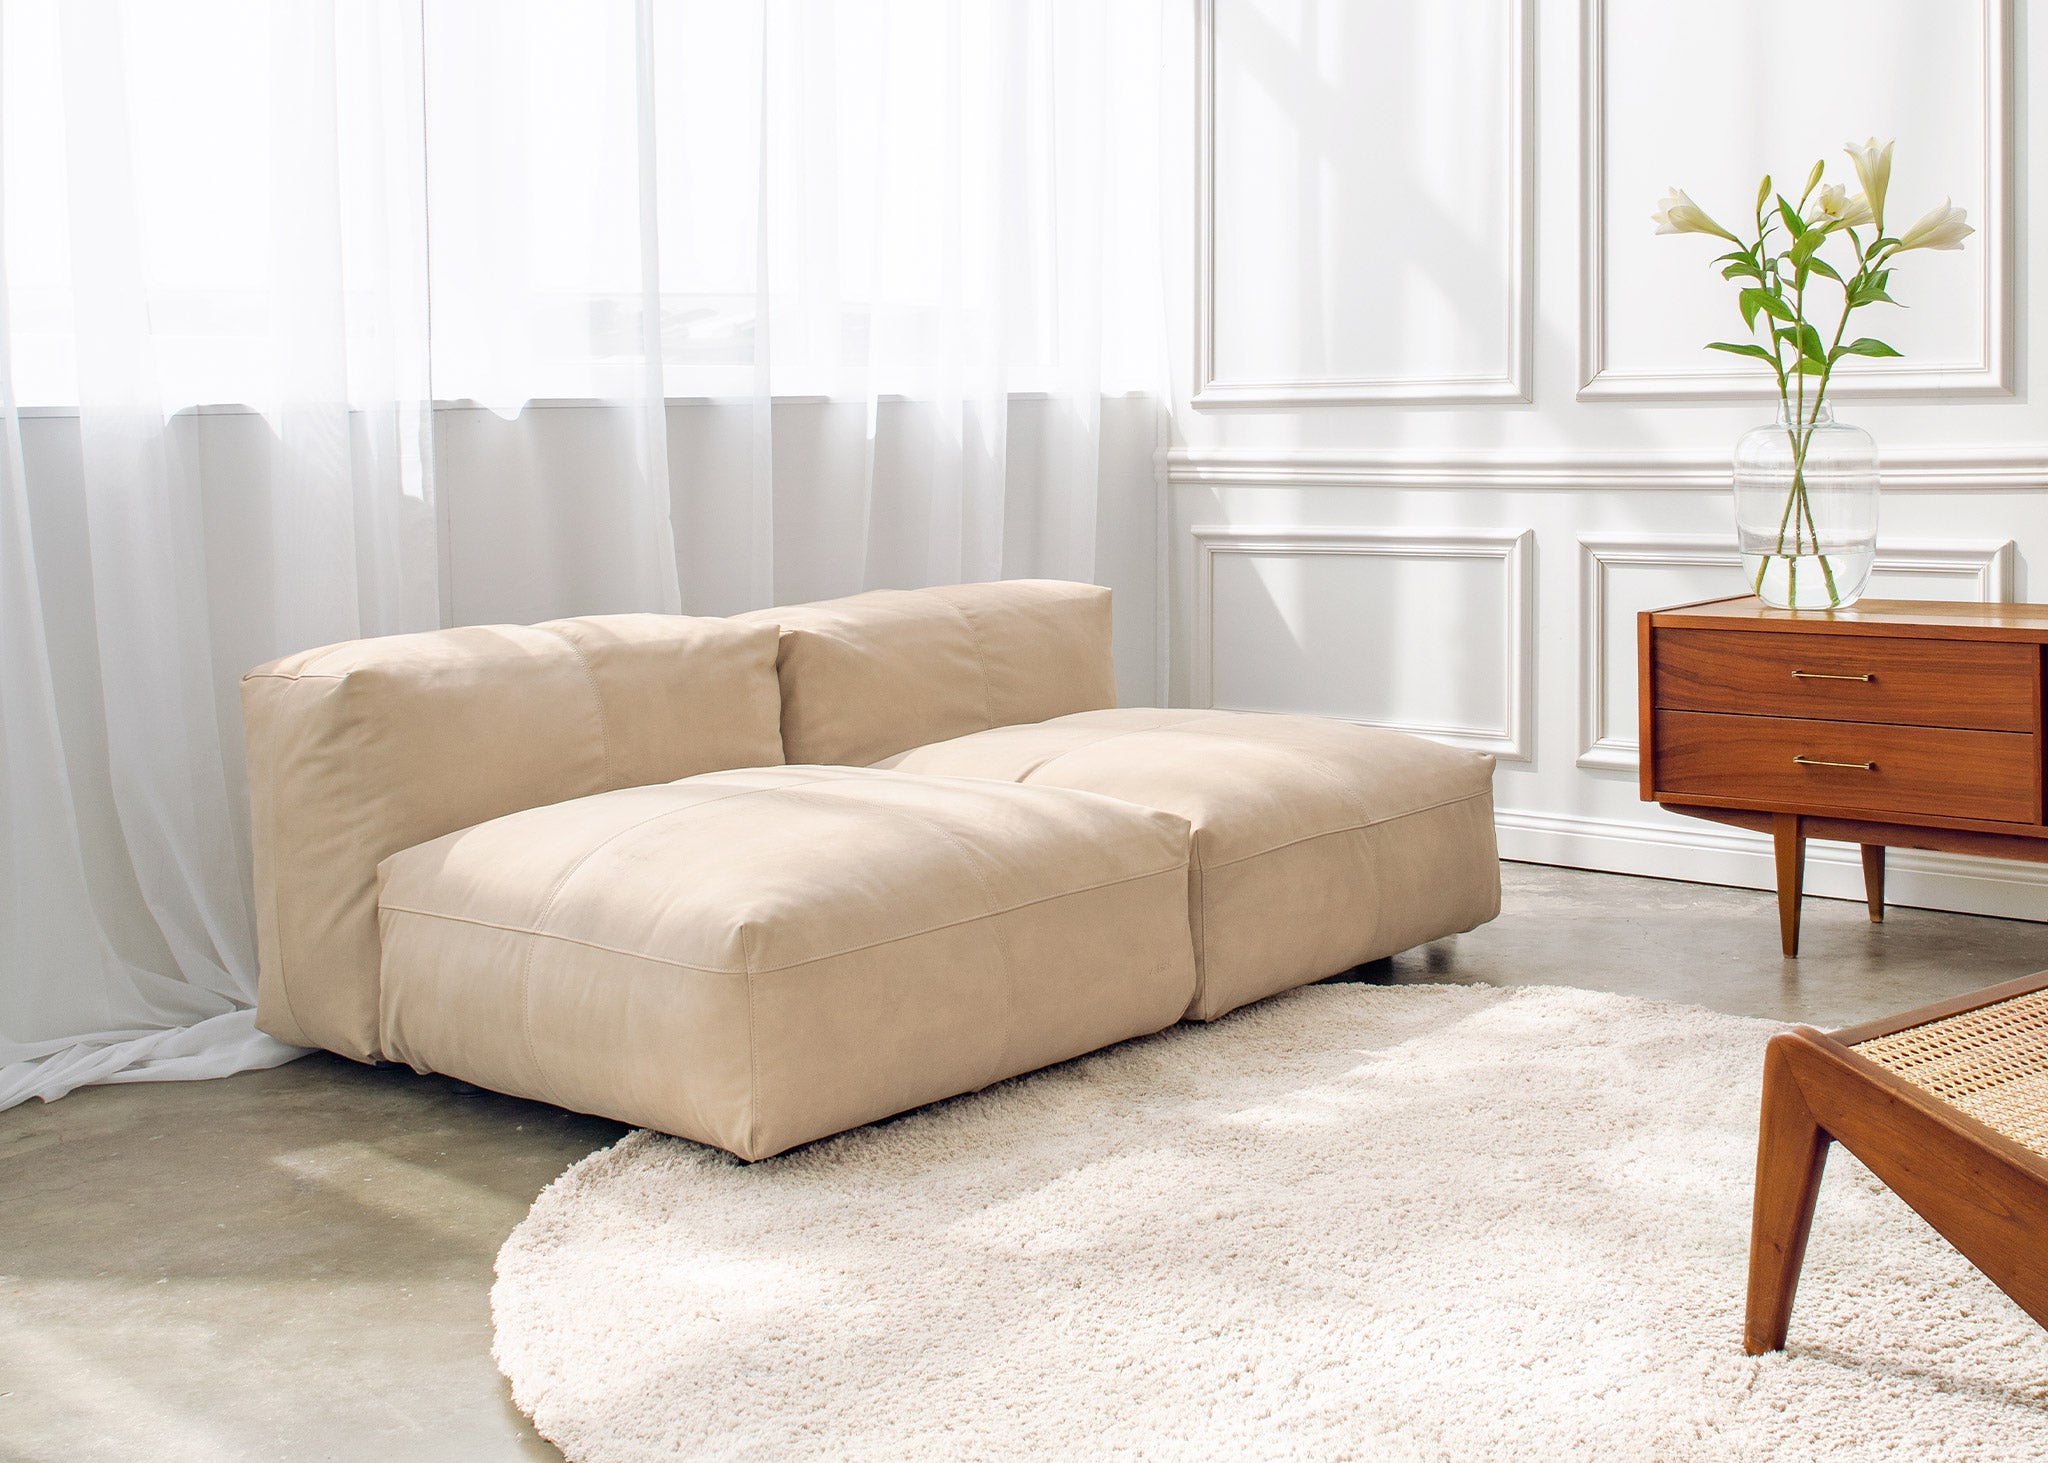 vetsak®-Two Seat Lounge Sofa M Leather light beige